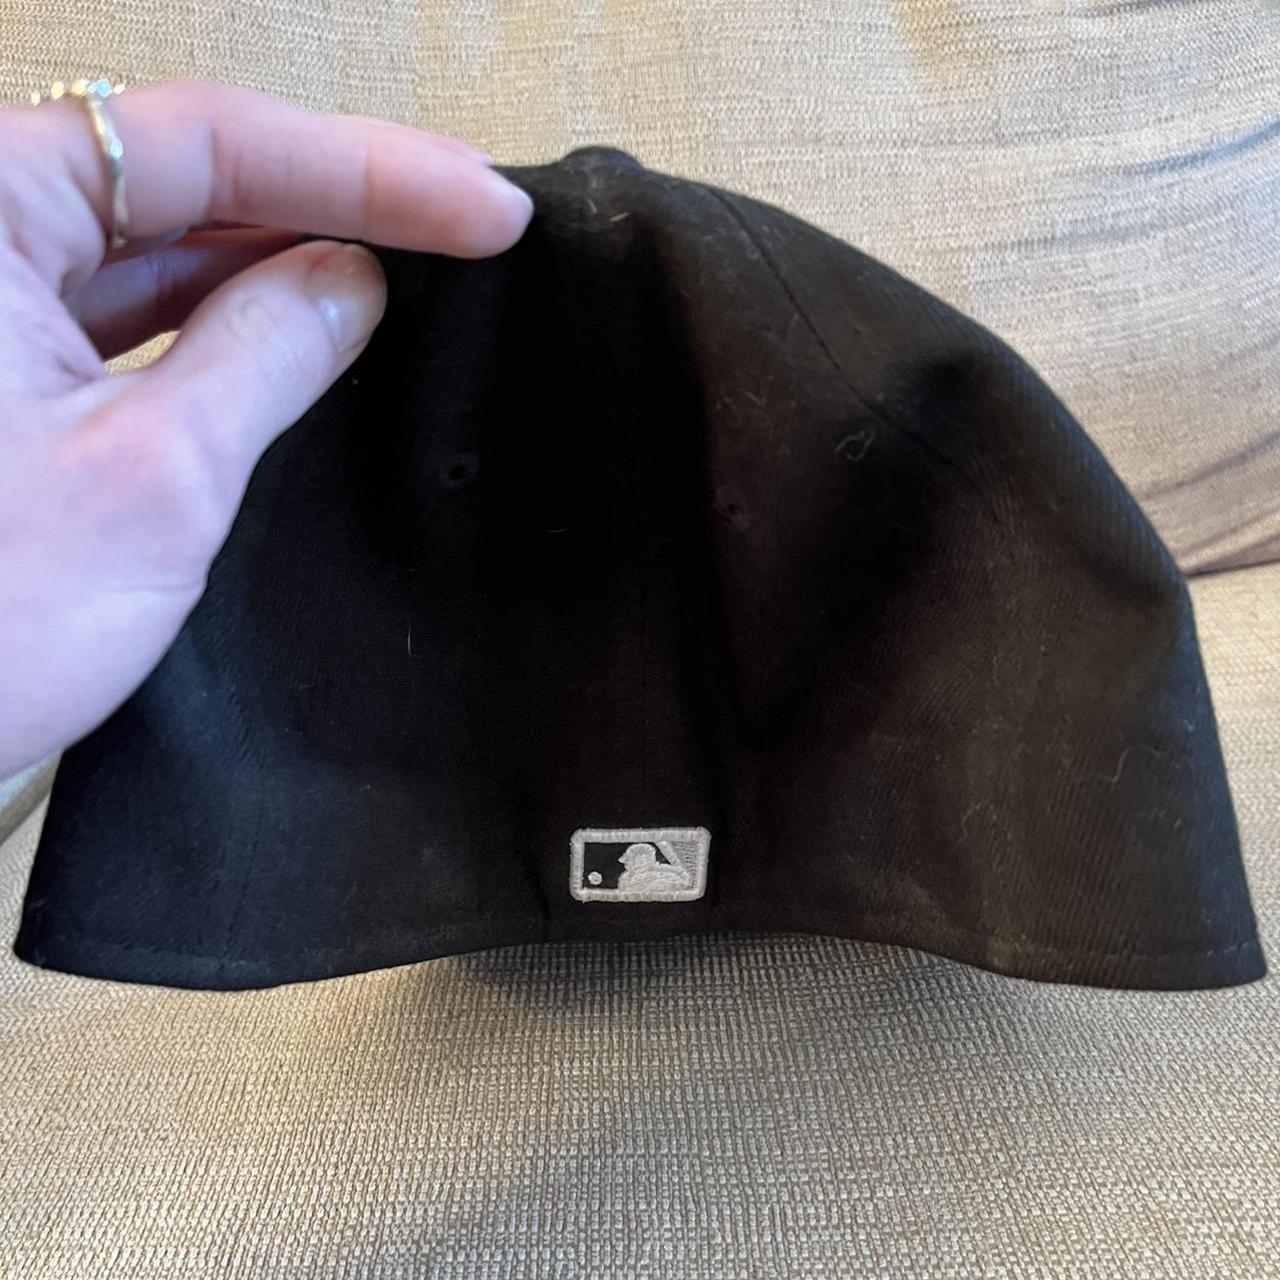 Chicago White Sox Leather New Era Hat - Size 7 - Depop